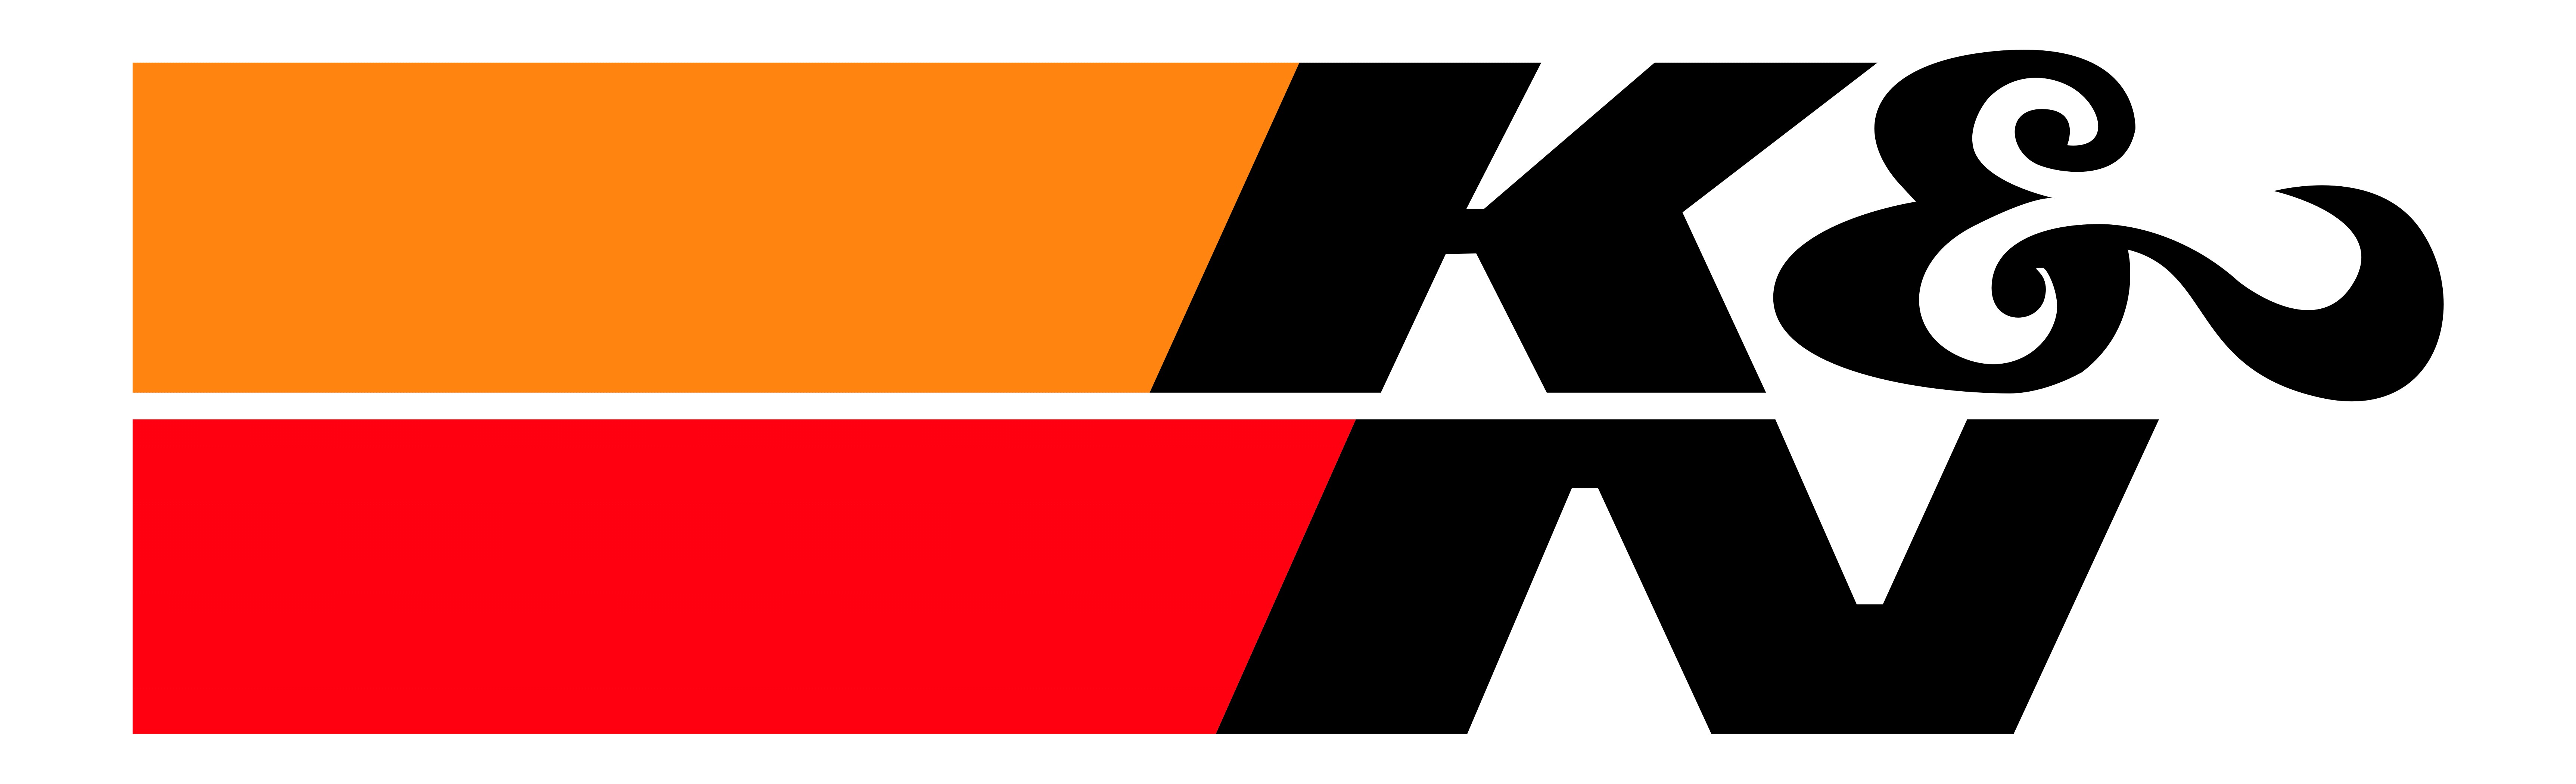 Kn Logo Vector PNG - 114412